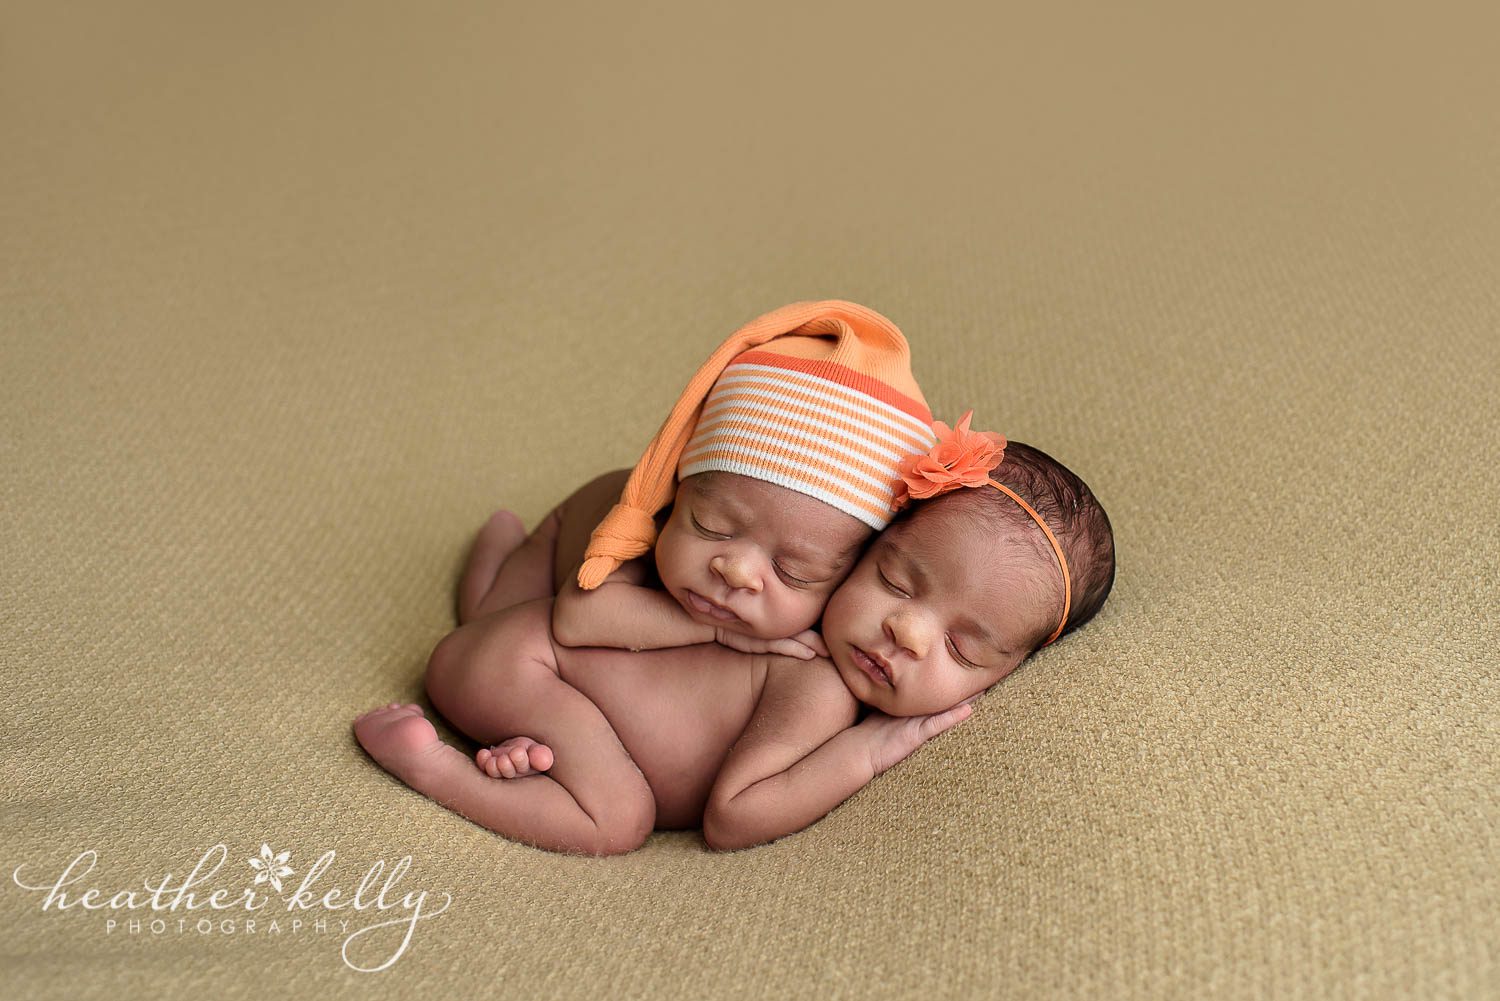 newborn twins on beanbag. east hartford ct newborn photography